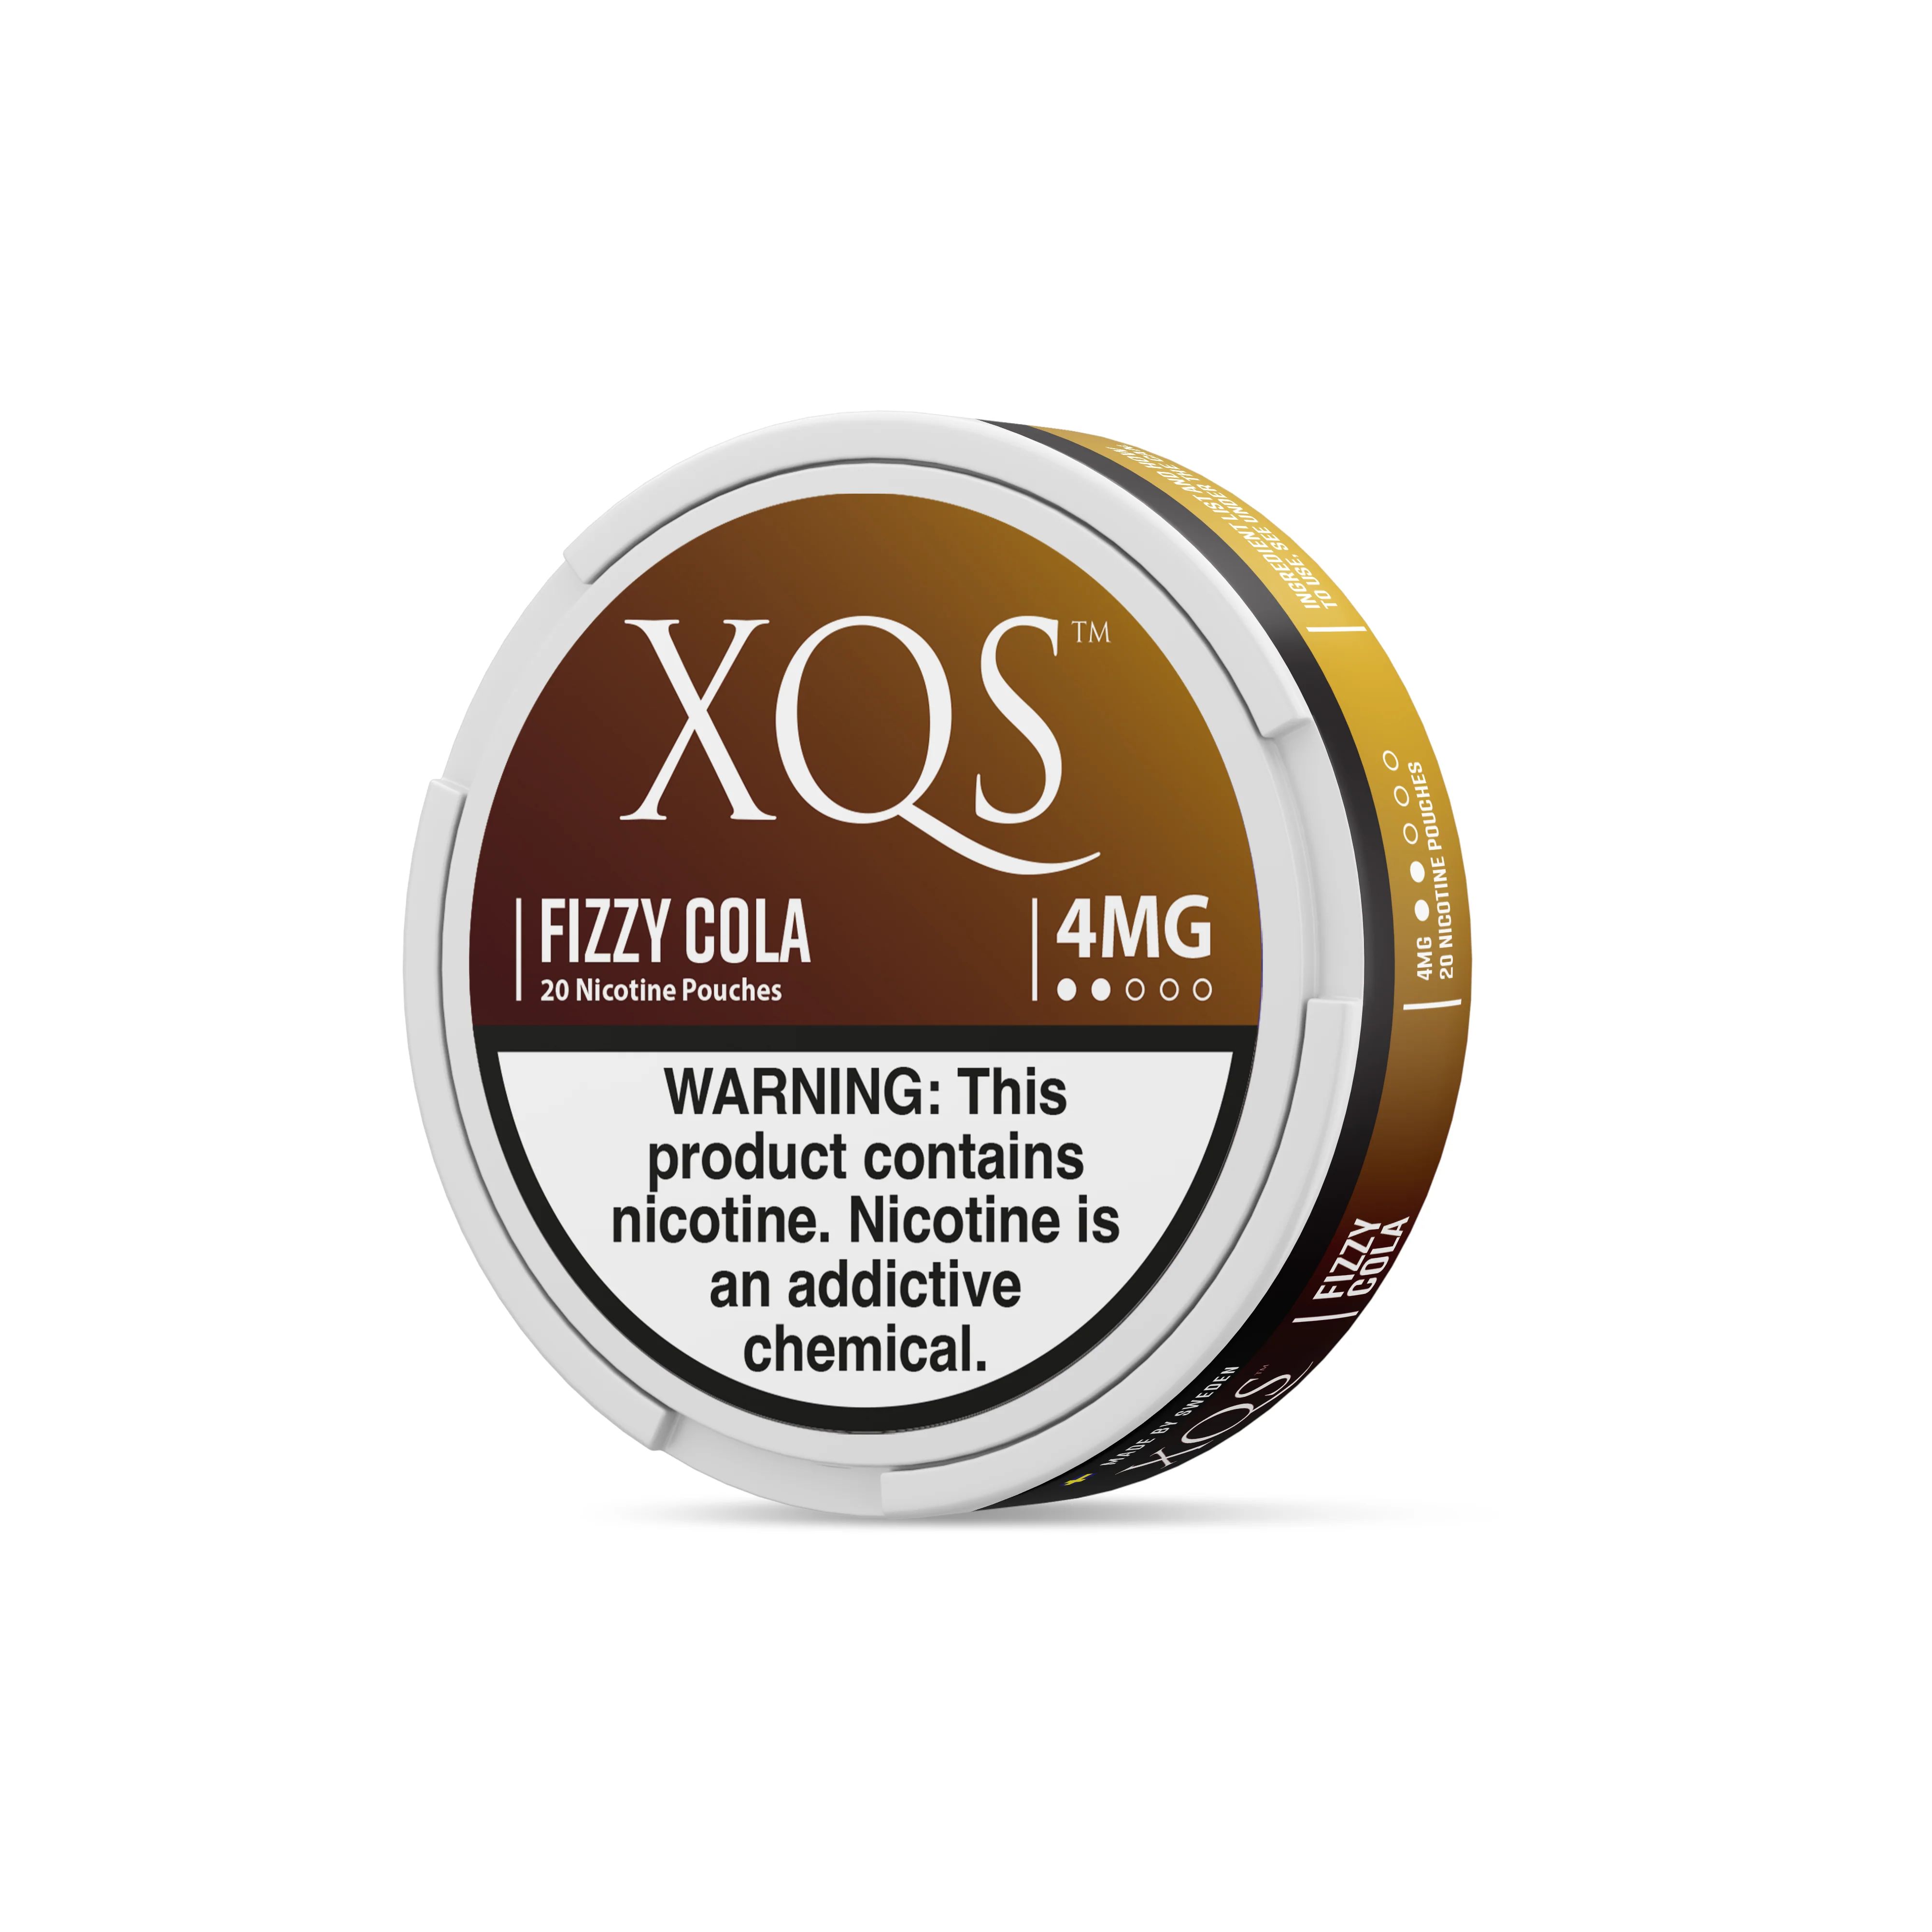 Xqs fizzy cola 4mg nicotine pouch